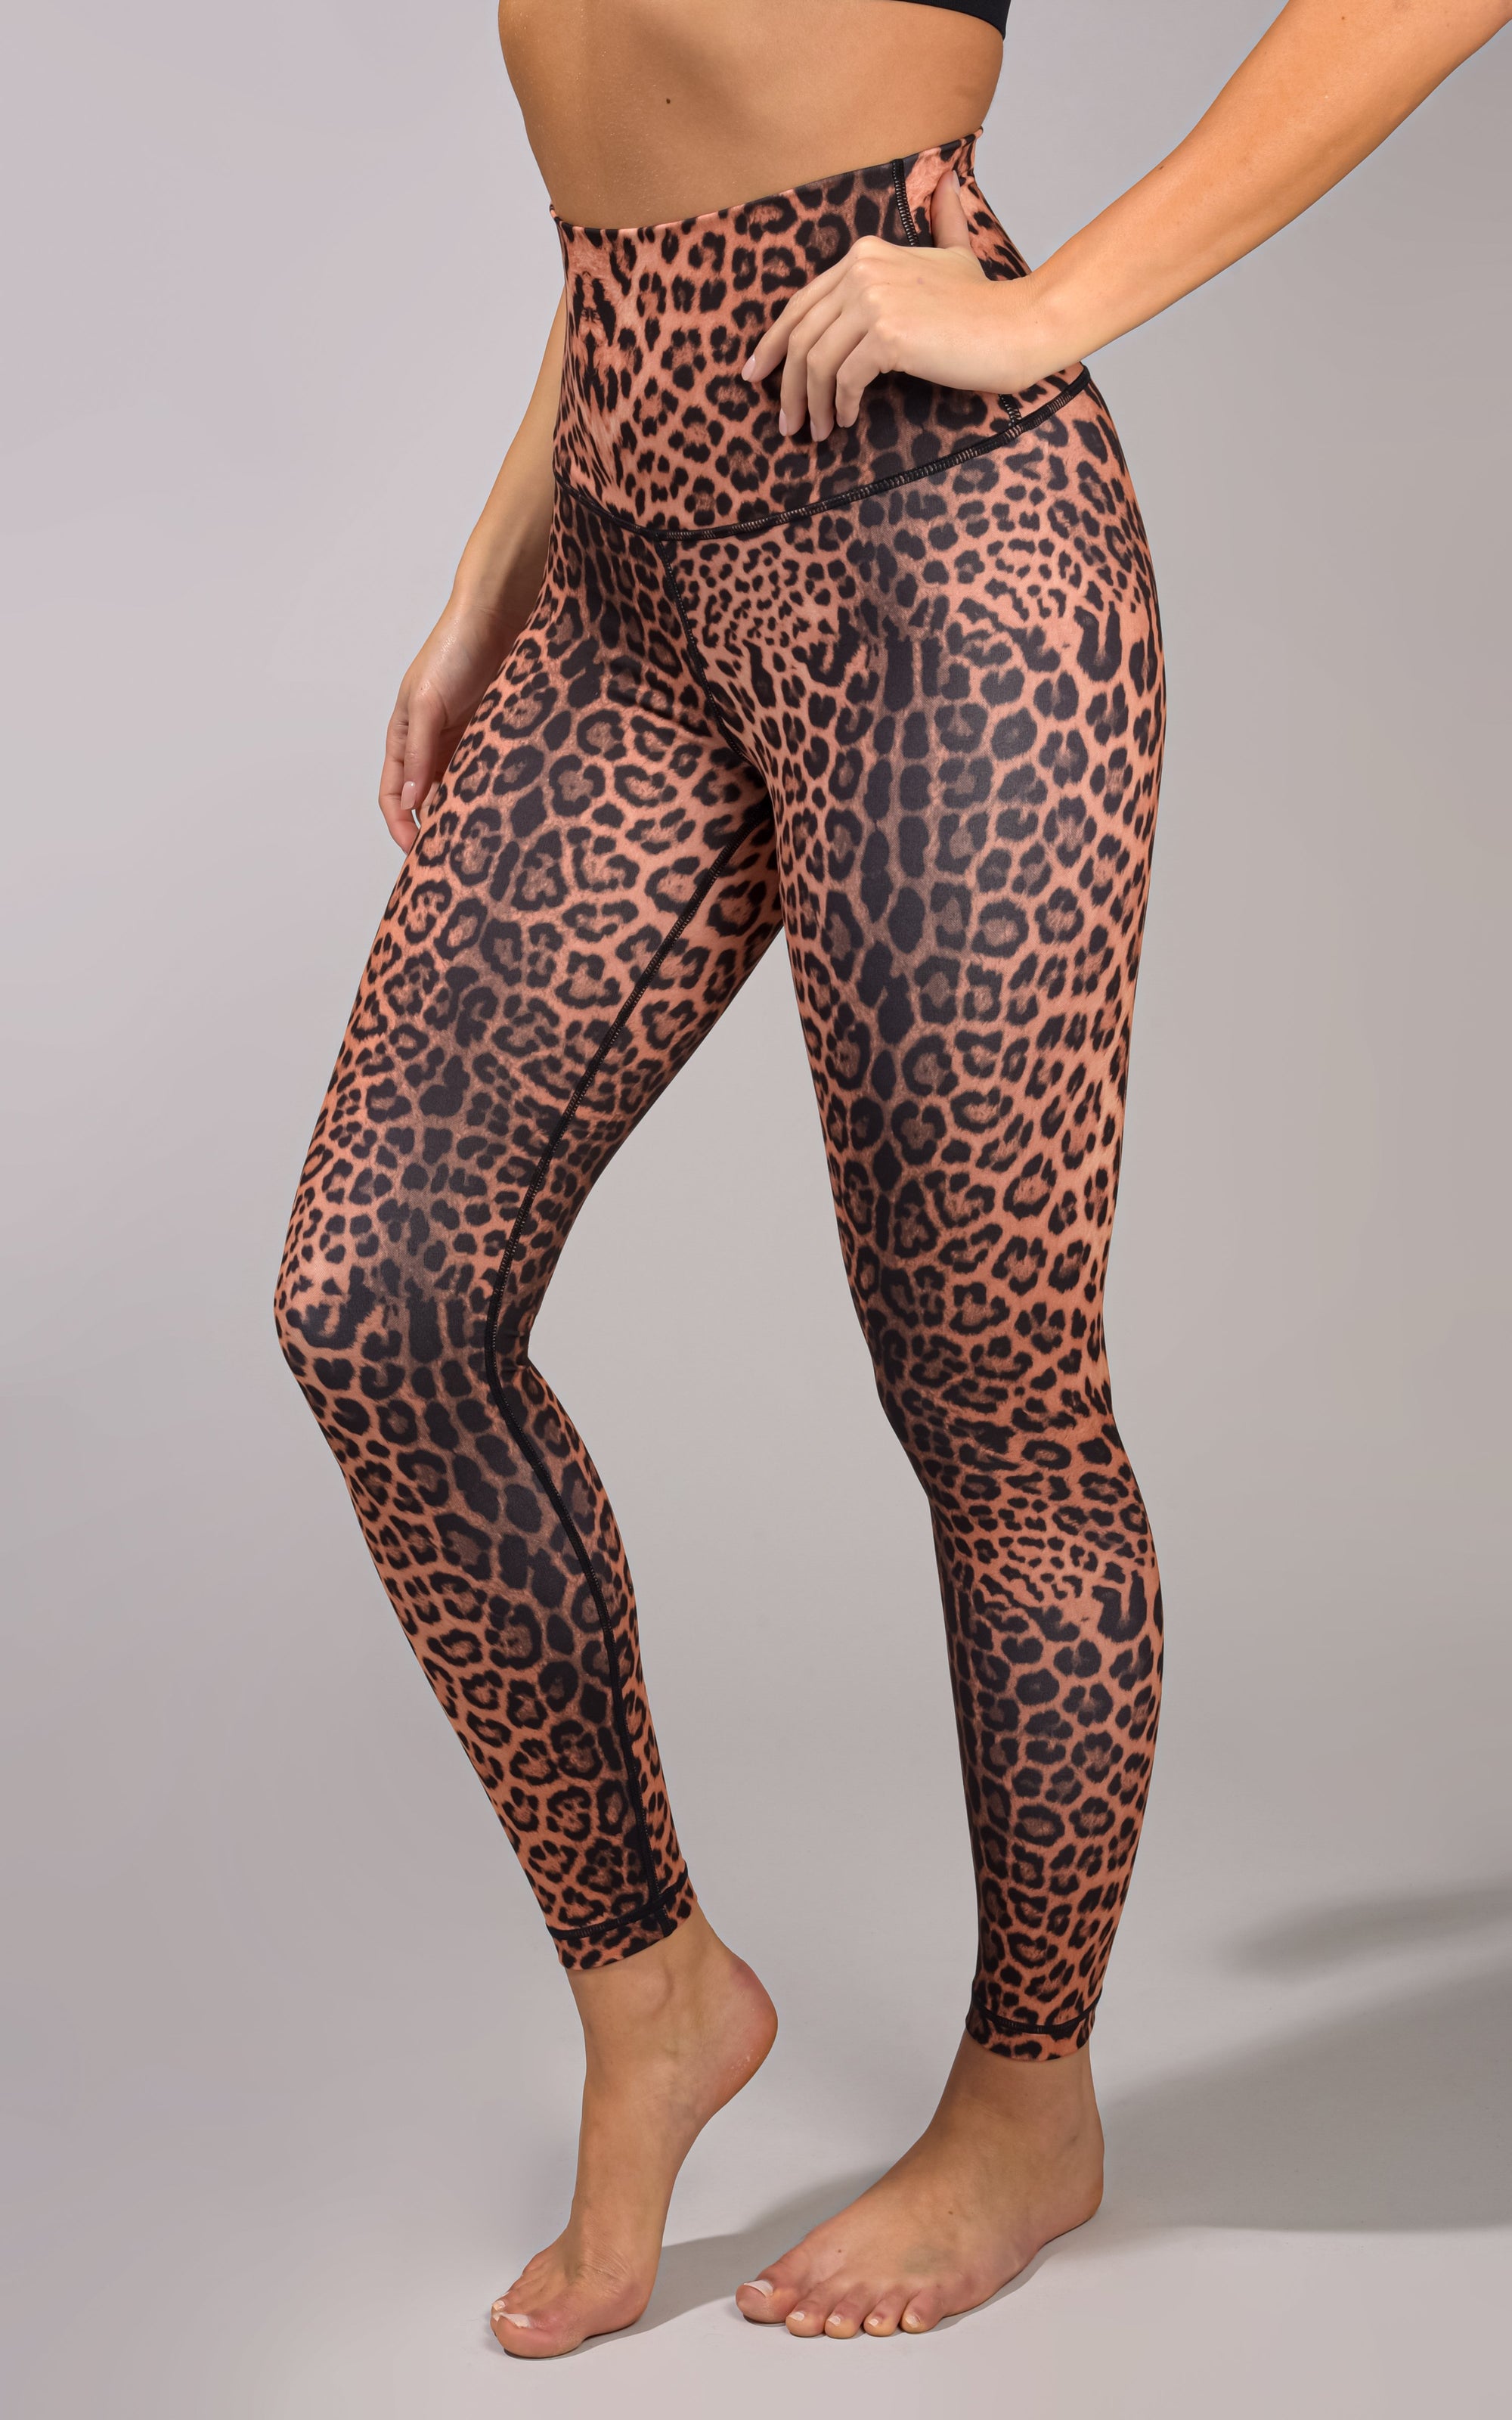 Black Leopard Leggings Jaguar Animal Leggings, Leopard Print